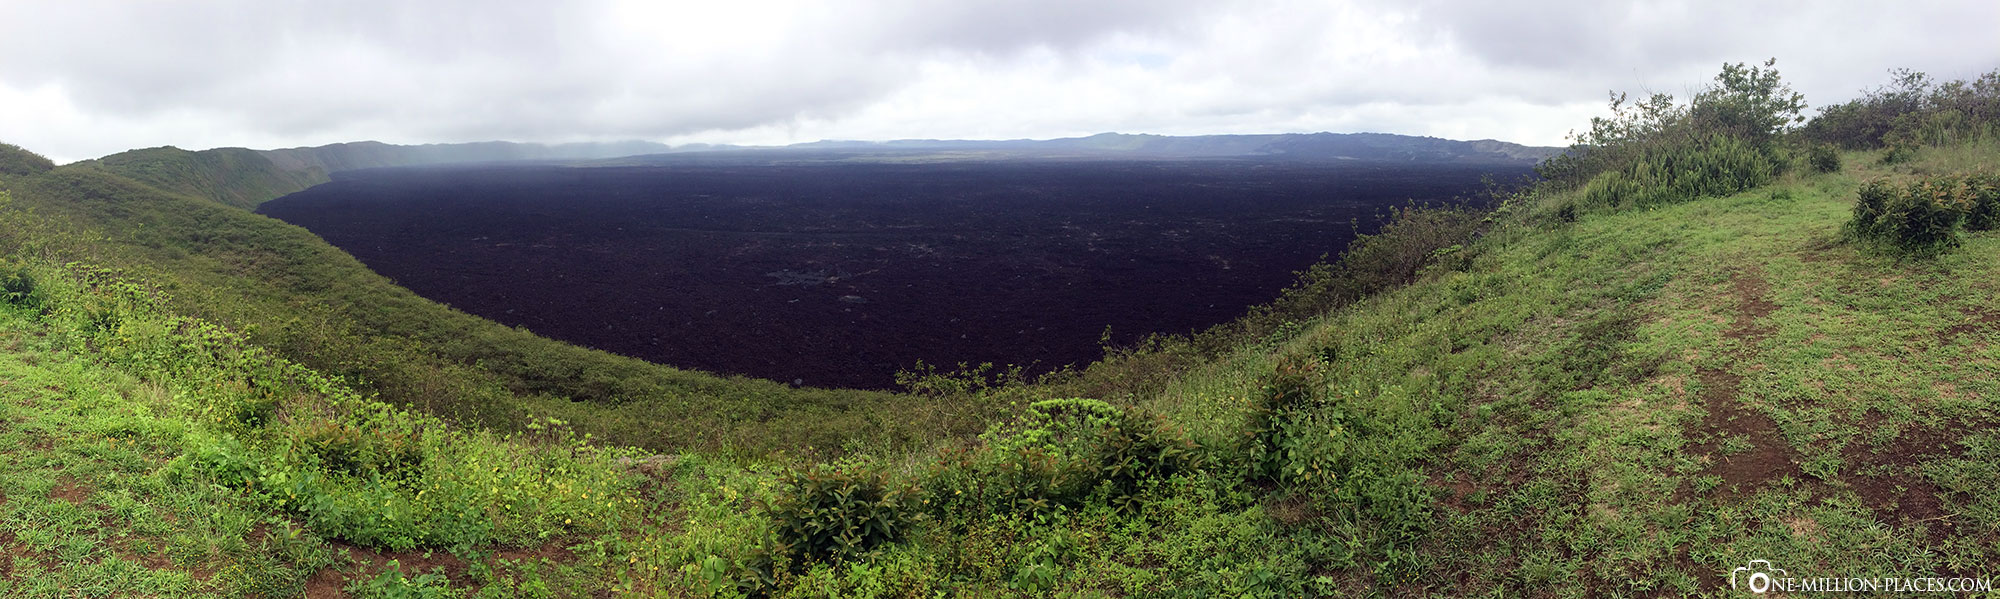 Panoramabild, Sierra Negra, Vulkan, Insel Isabella, Galapagos, Ecuador, Rundreise, Tierwelt, Reisebericht